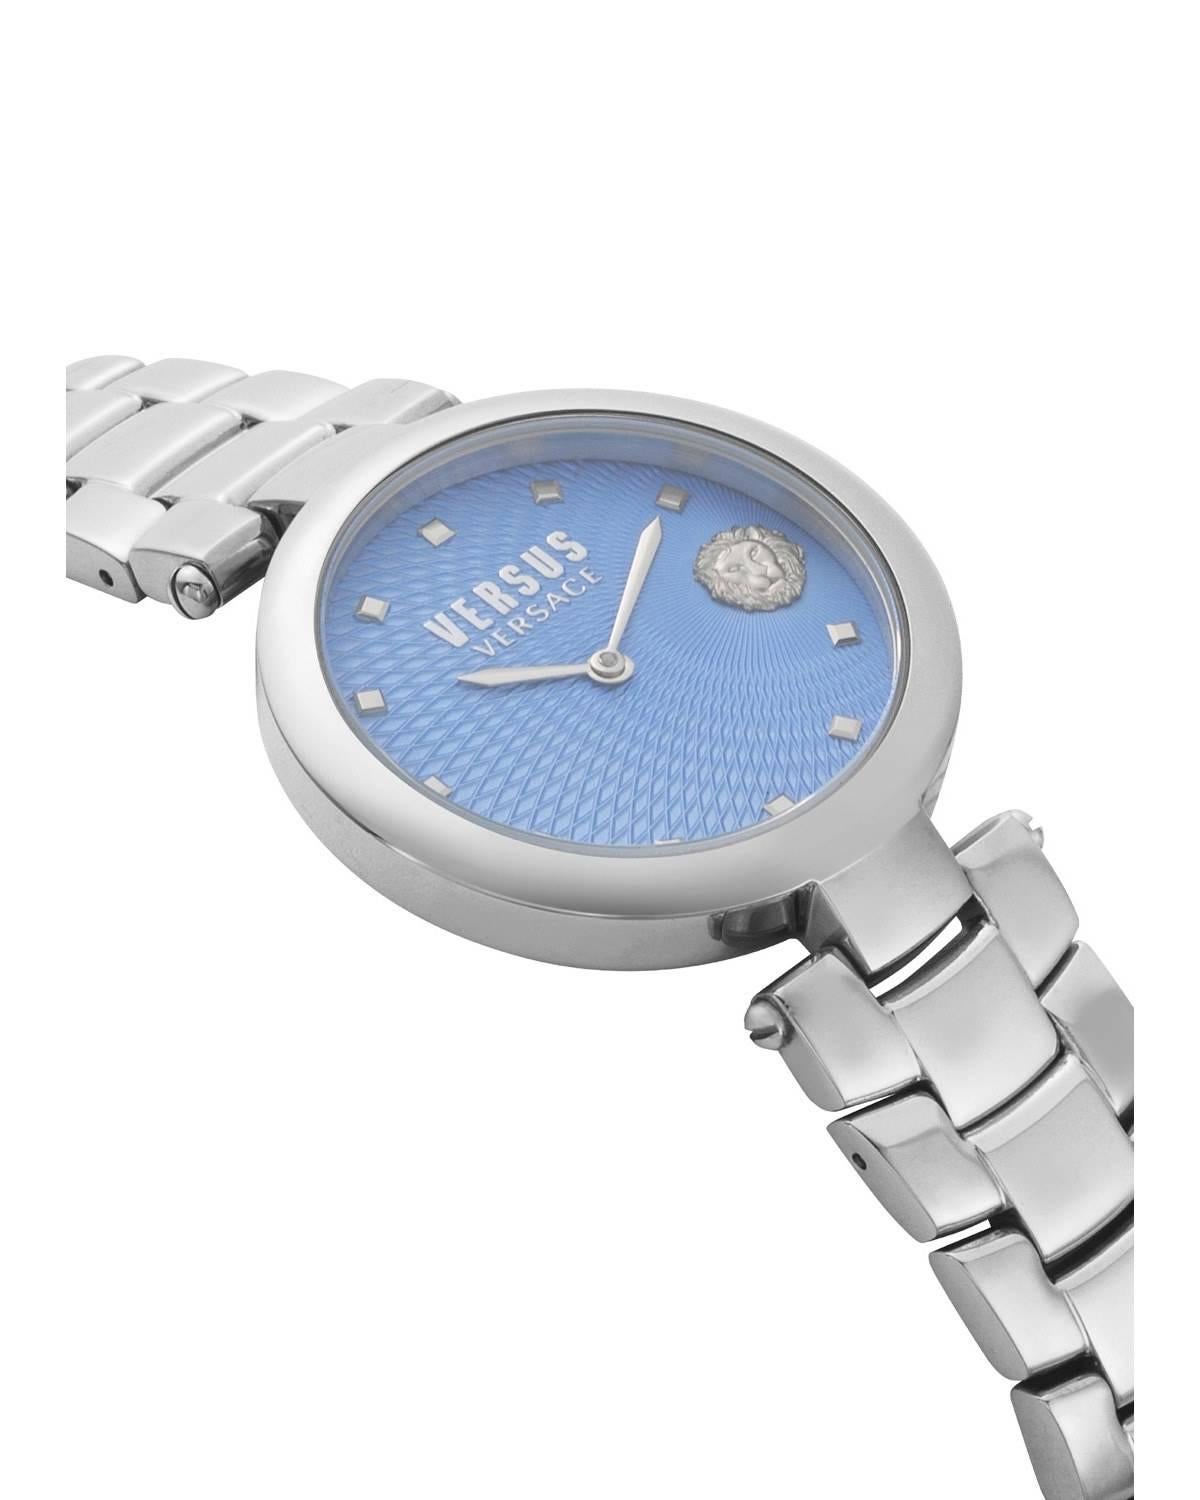 Versus by Versace Buffle Watch

silver tone wrist

light blu tone case